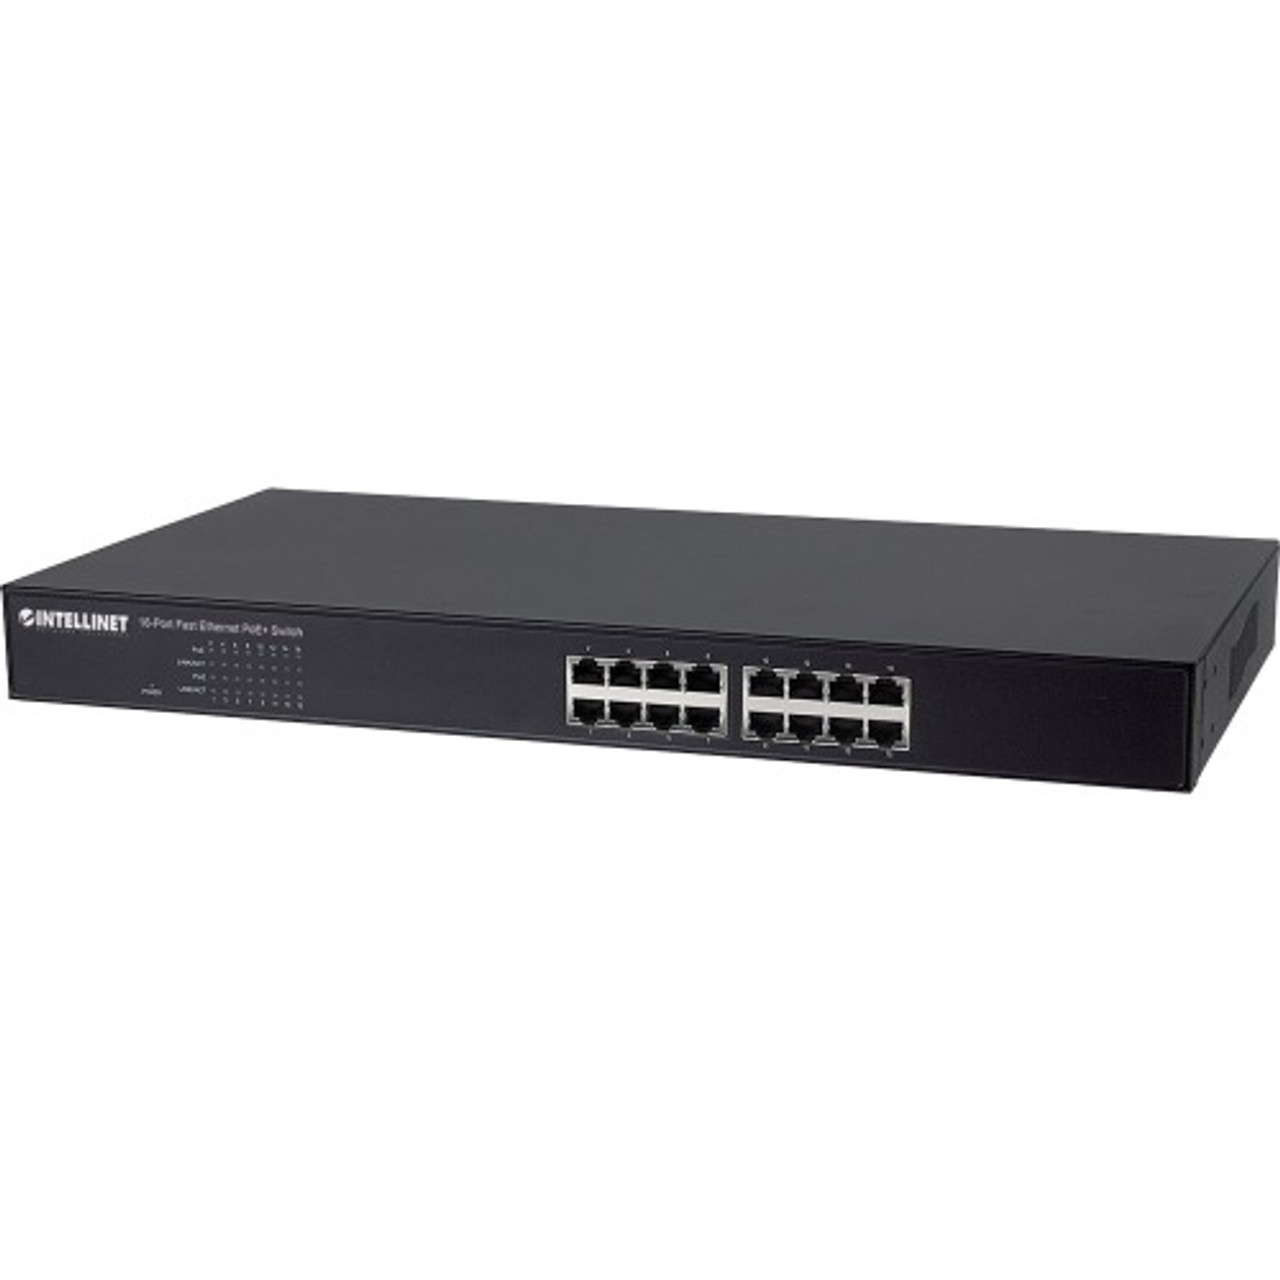 560849 Intellinet Network 16-Ports 10/100Base-TX Fast Ethernet PoE+ Switch (Refurbished)